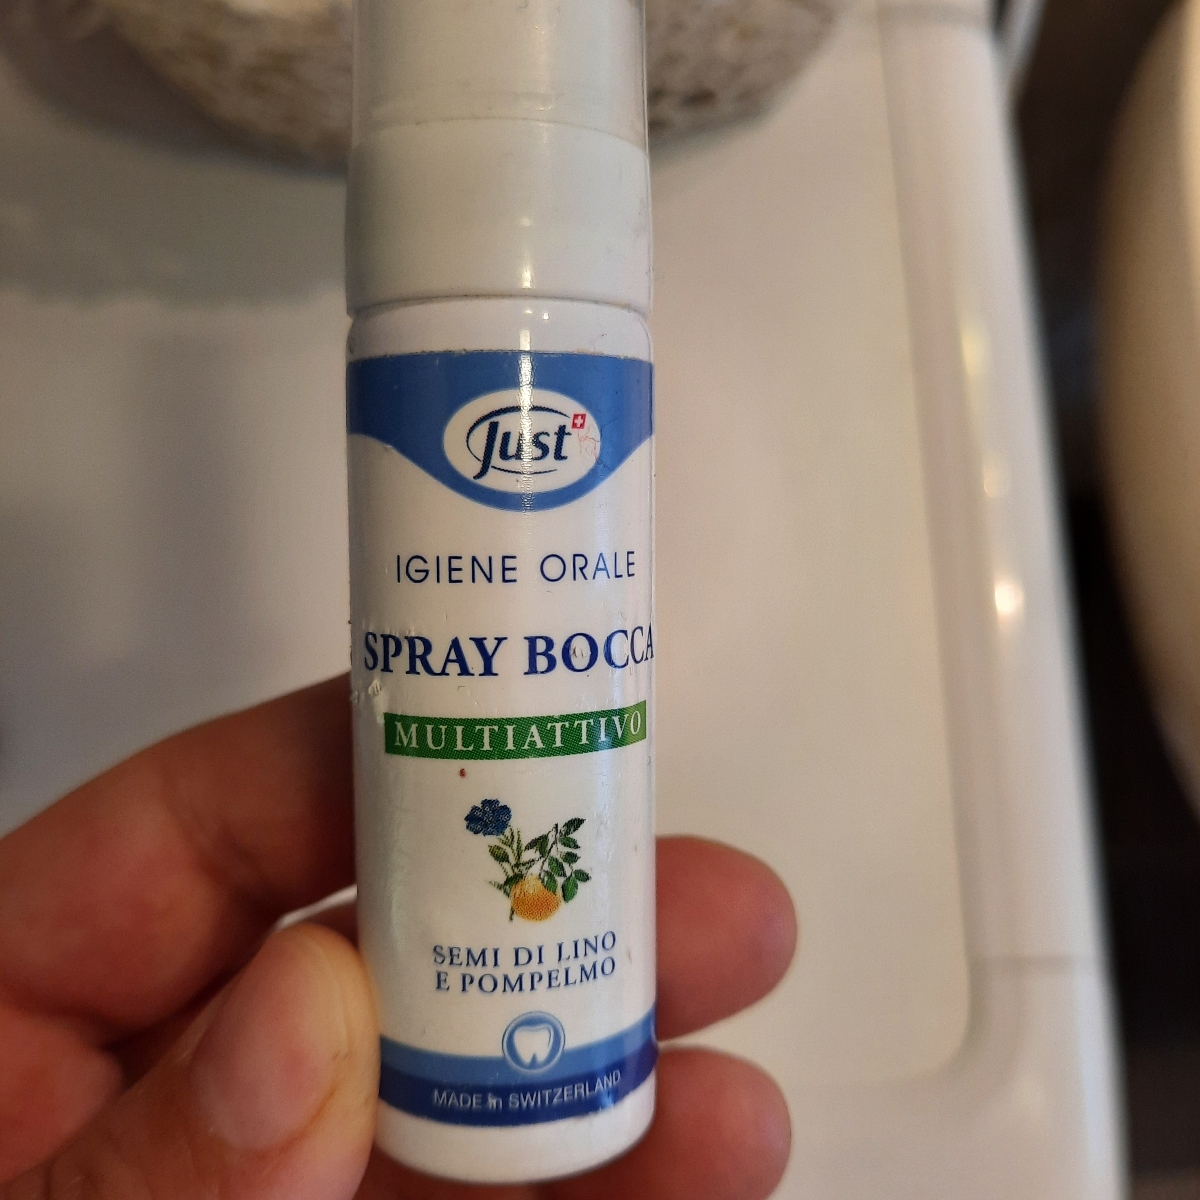 Just Spray bocca Reviews | abillion